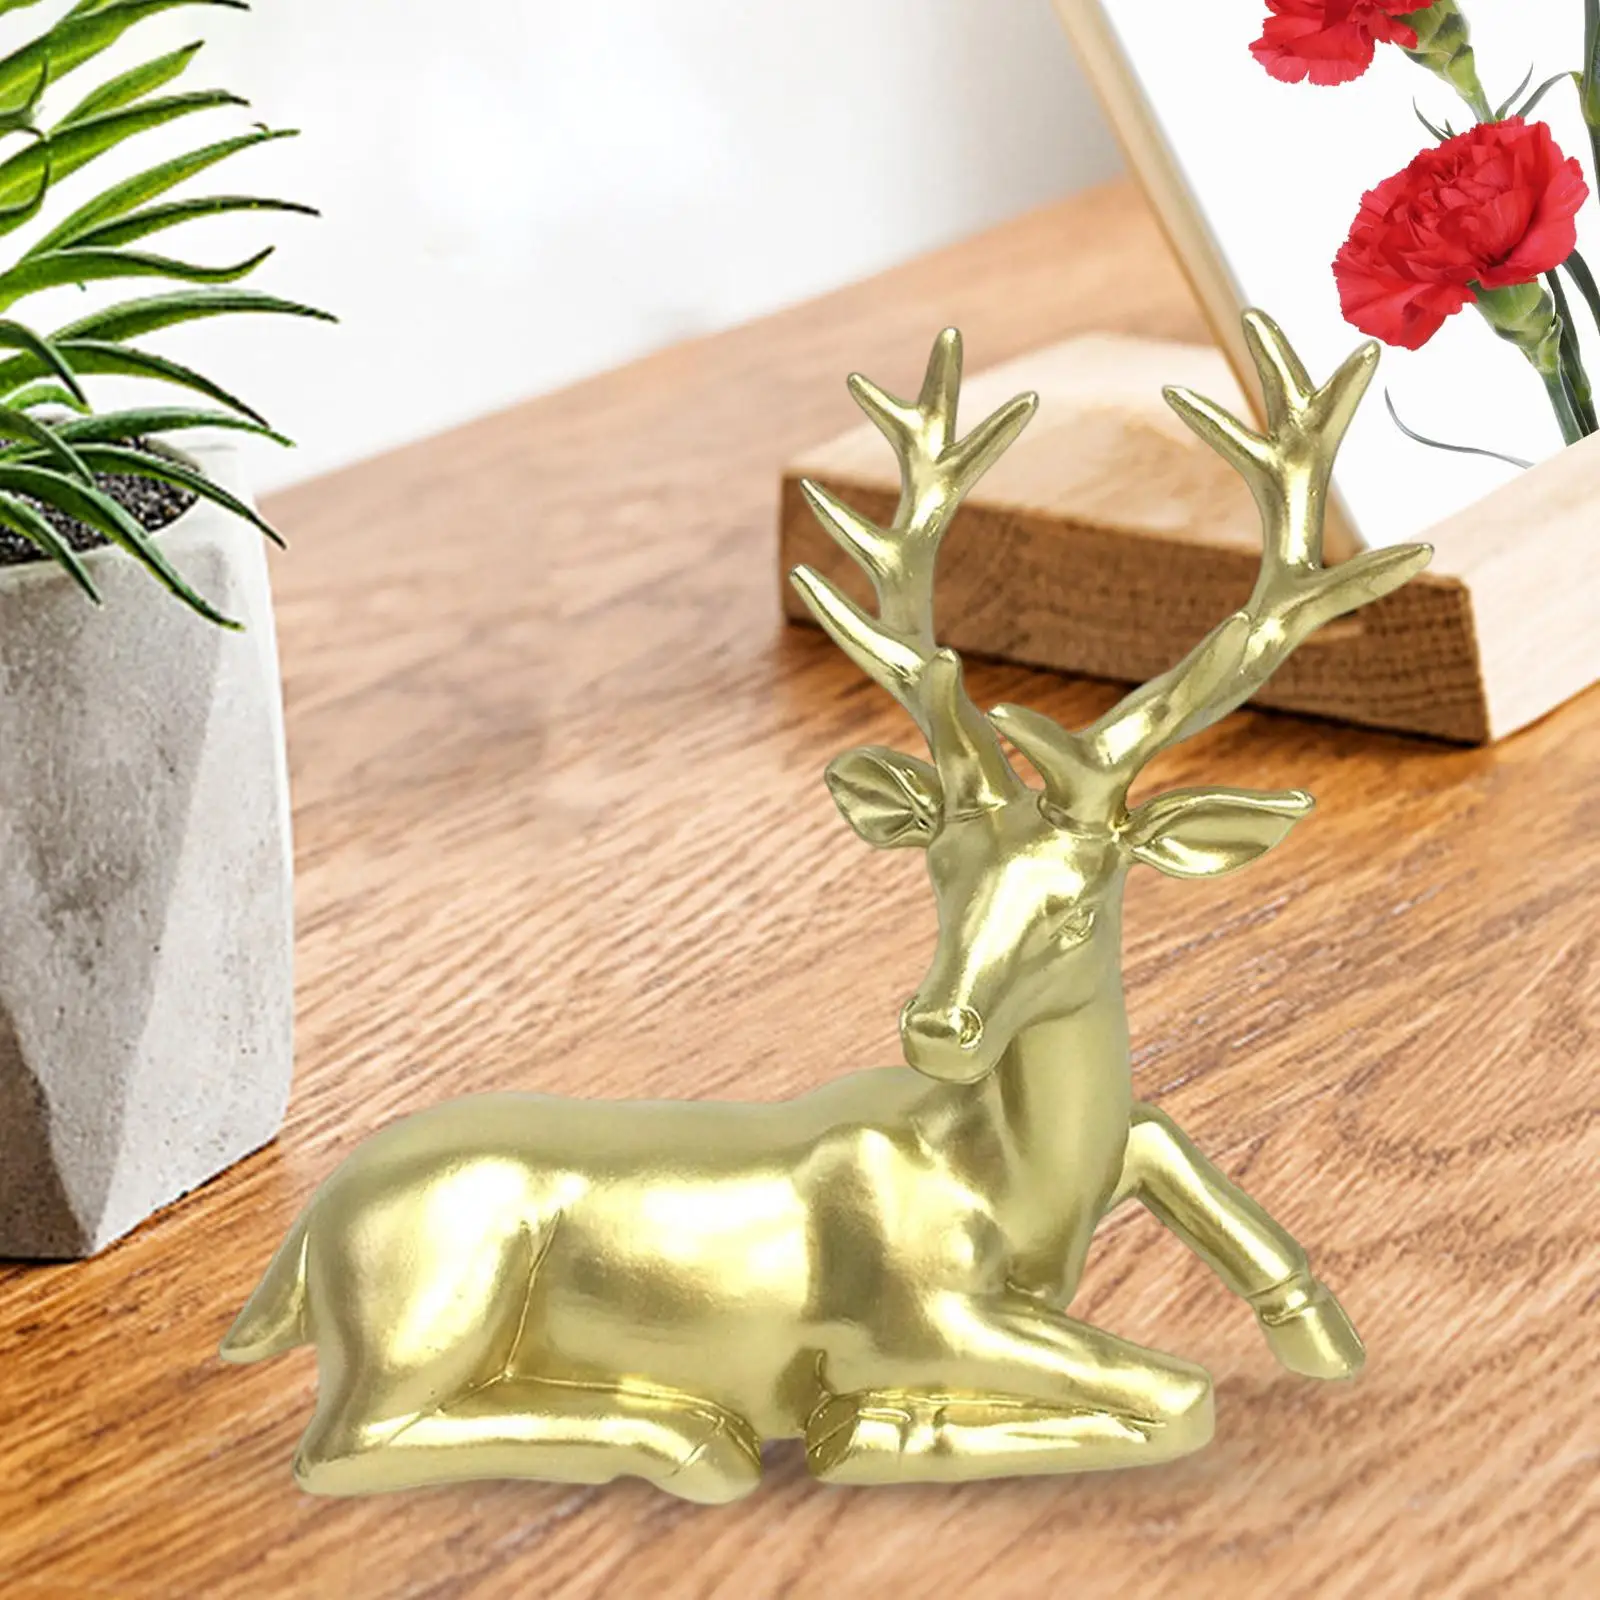 Modern Deer Statue Animal Sculpture Resin Reindeer Figurine Artwork Craft Ornament for Home Desktop Cabinet Wedding Decor